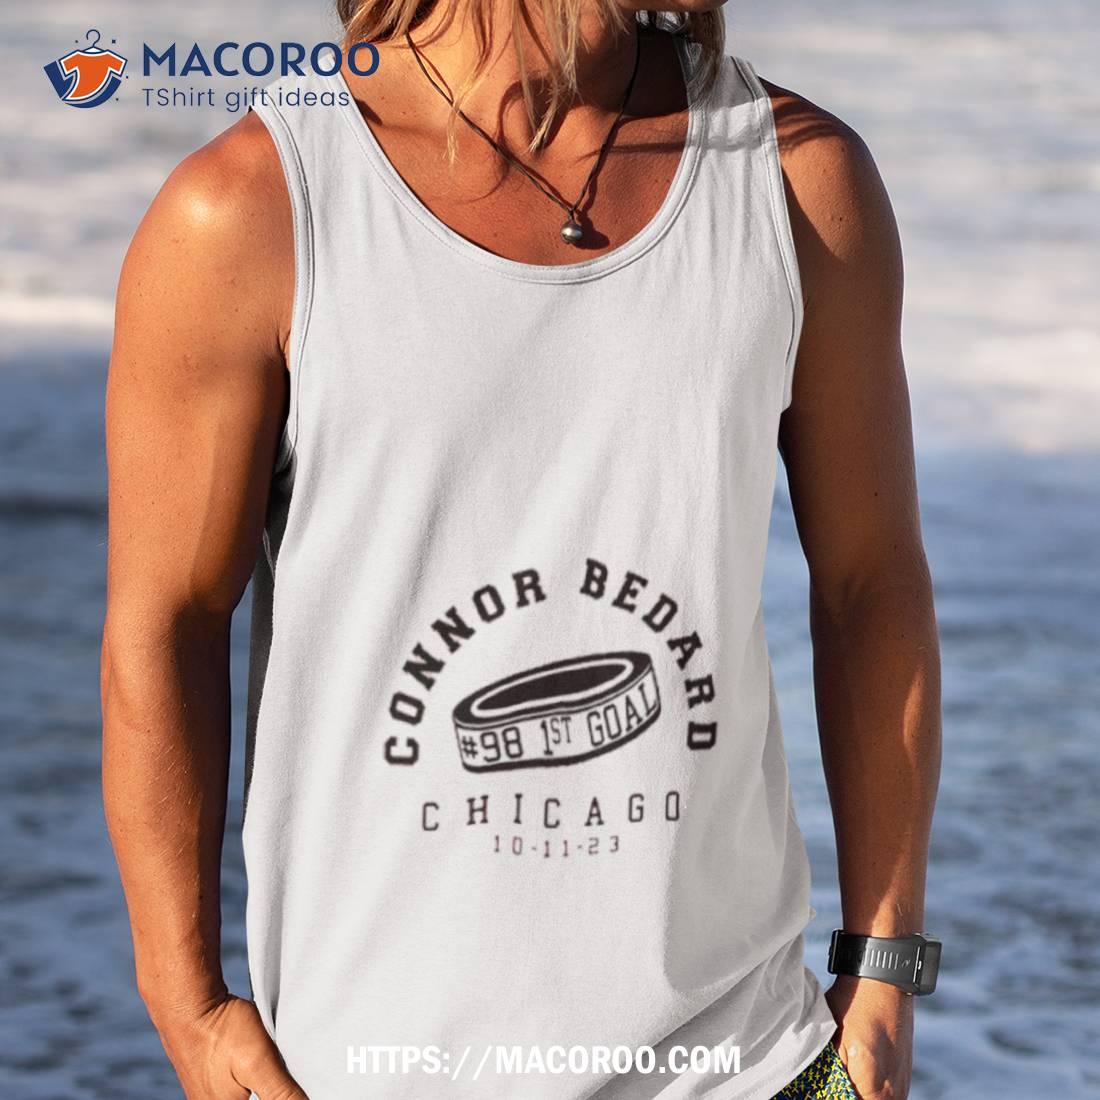 Chicago Connor Bedard Shirt